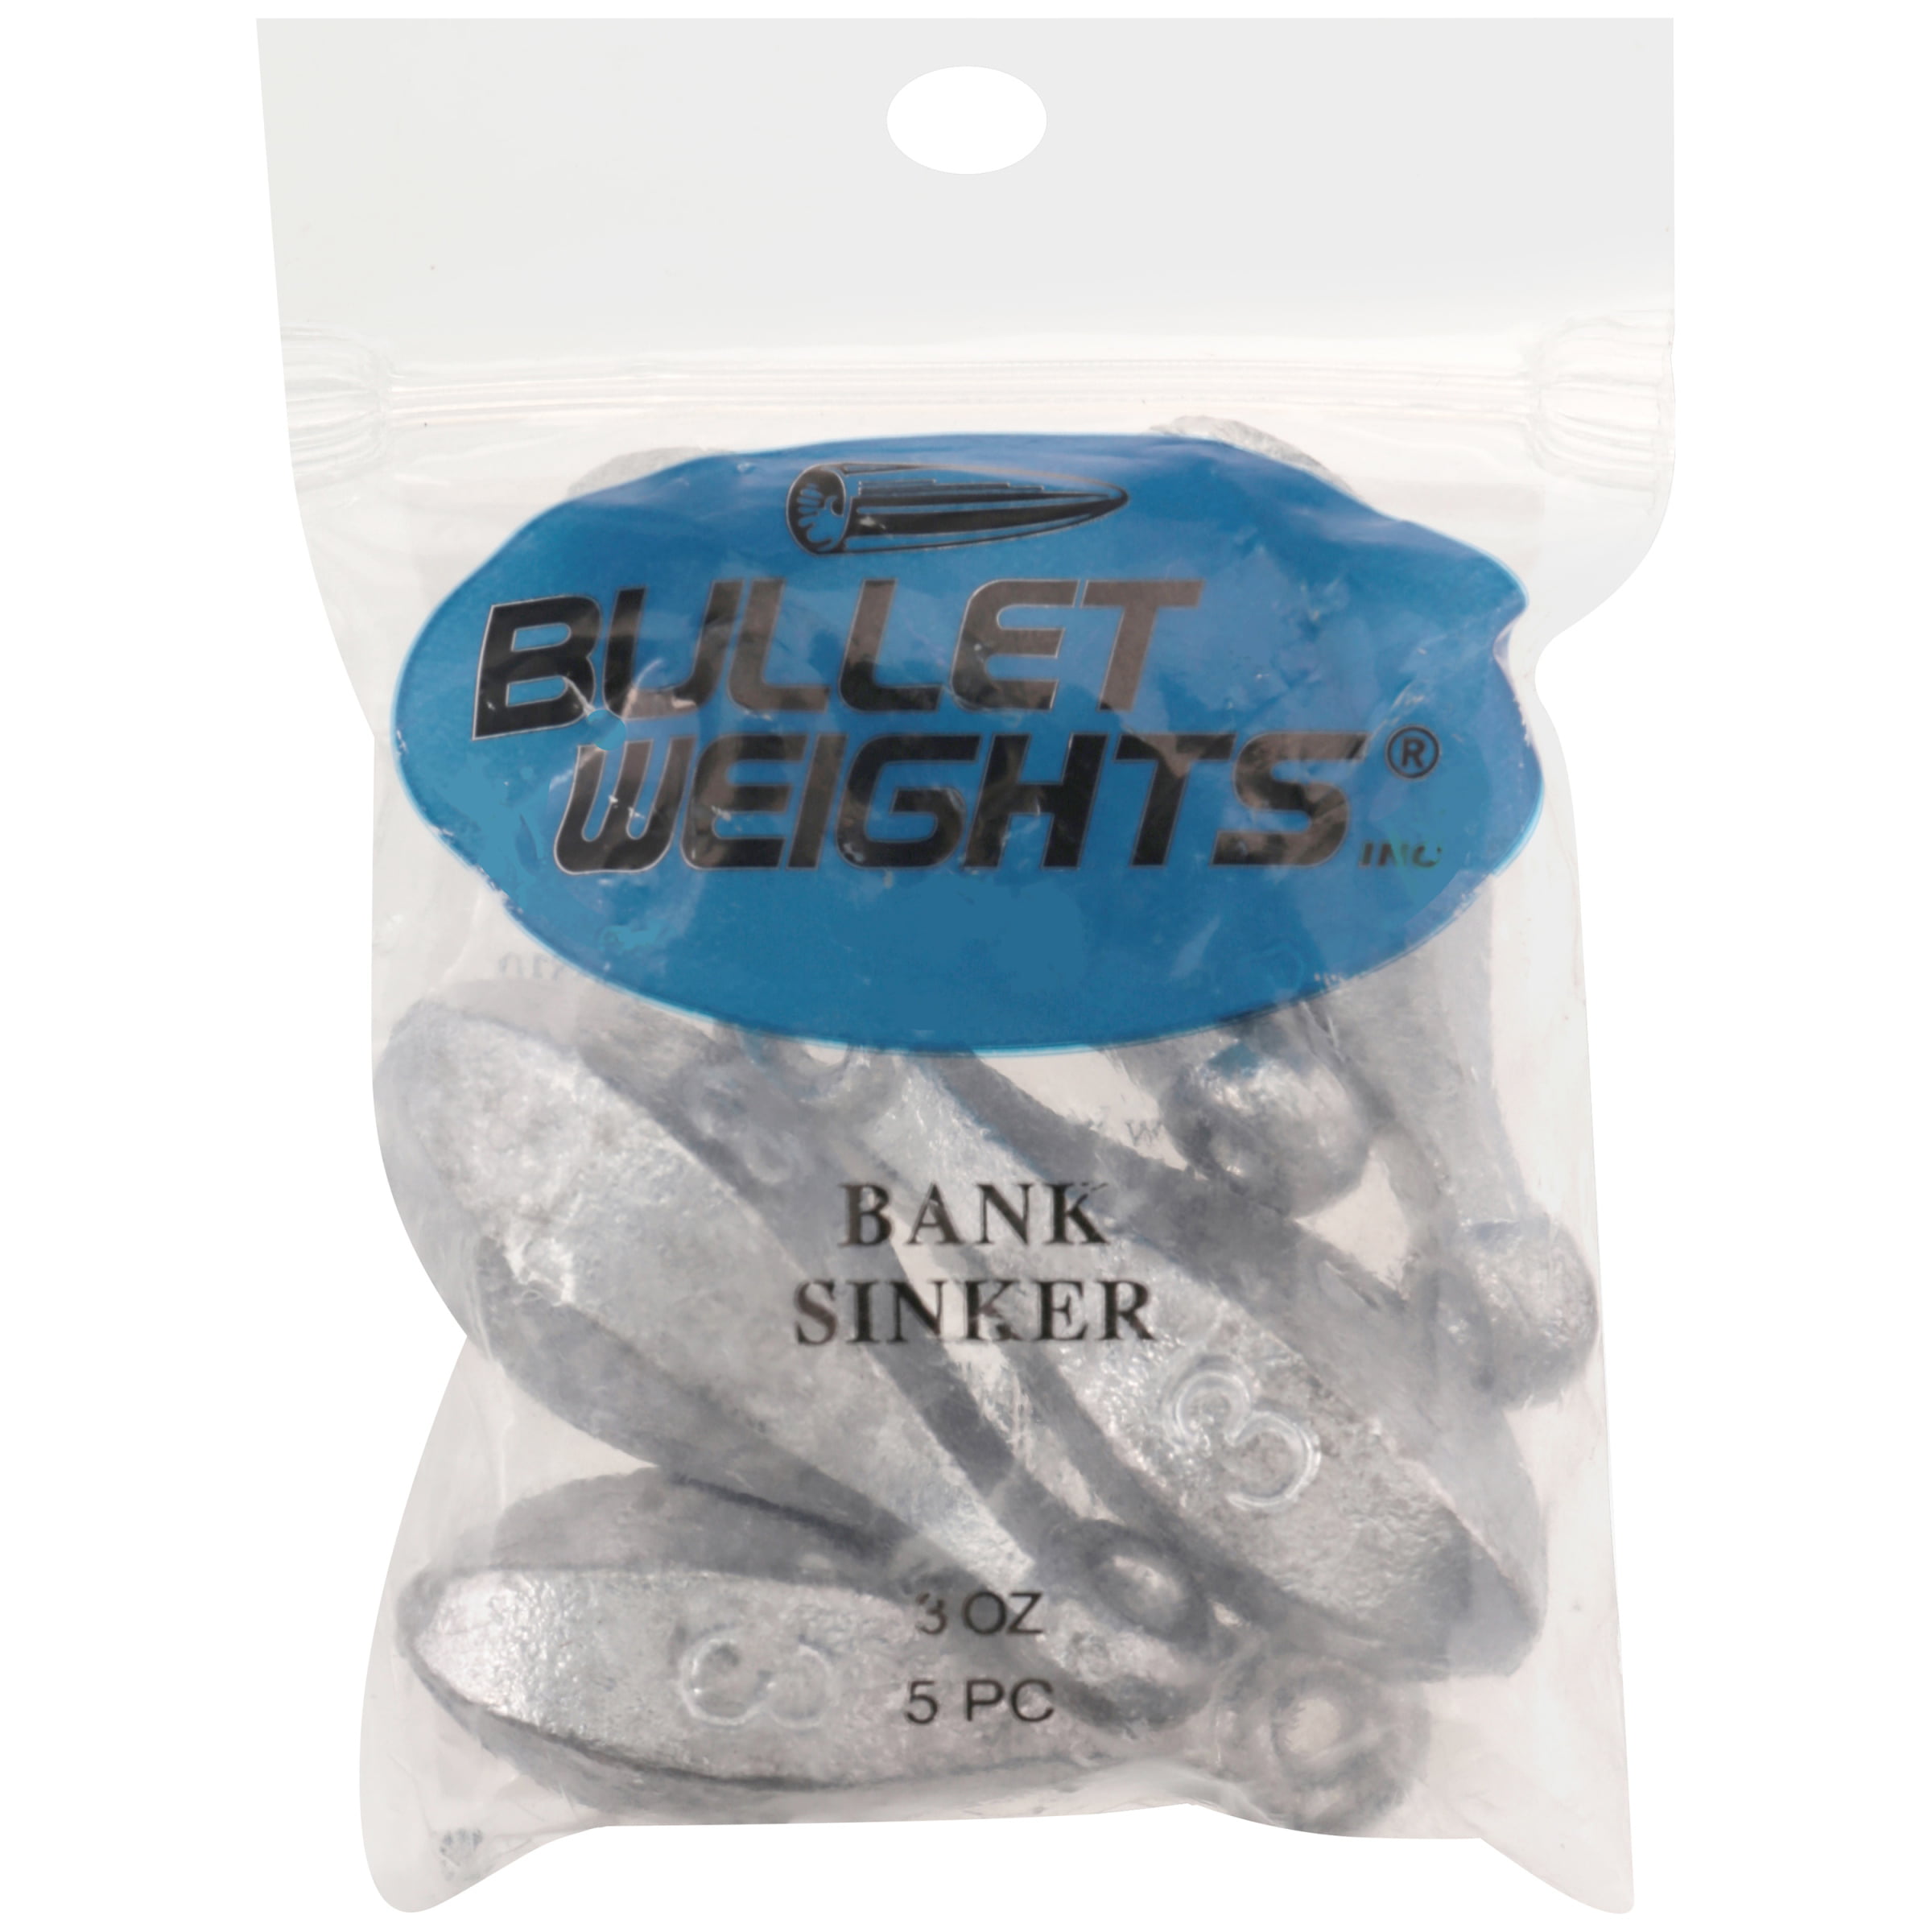 Bullet Weights® BLI3-24 Lead Bank Sinker Fishing Weight Sizes 3 Oz. 